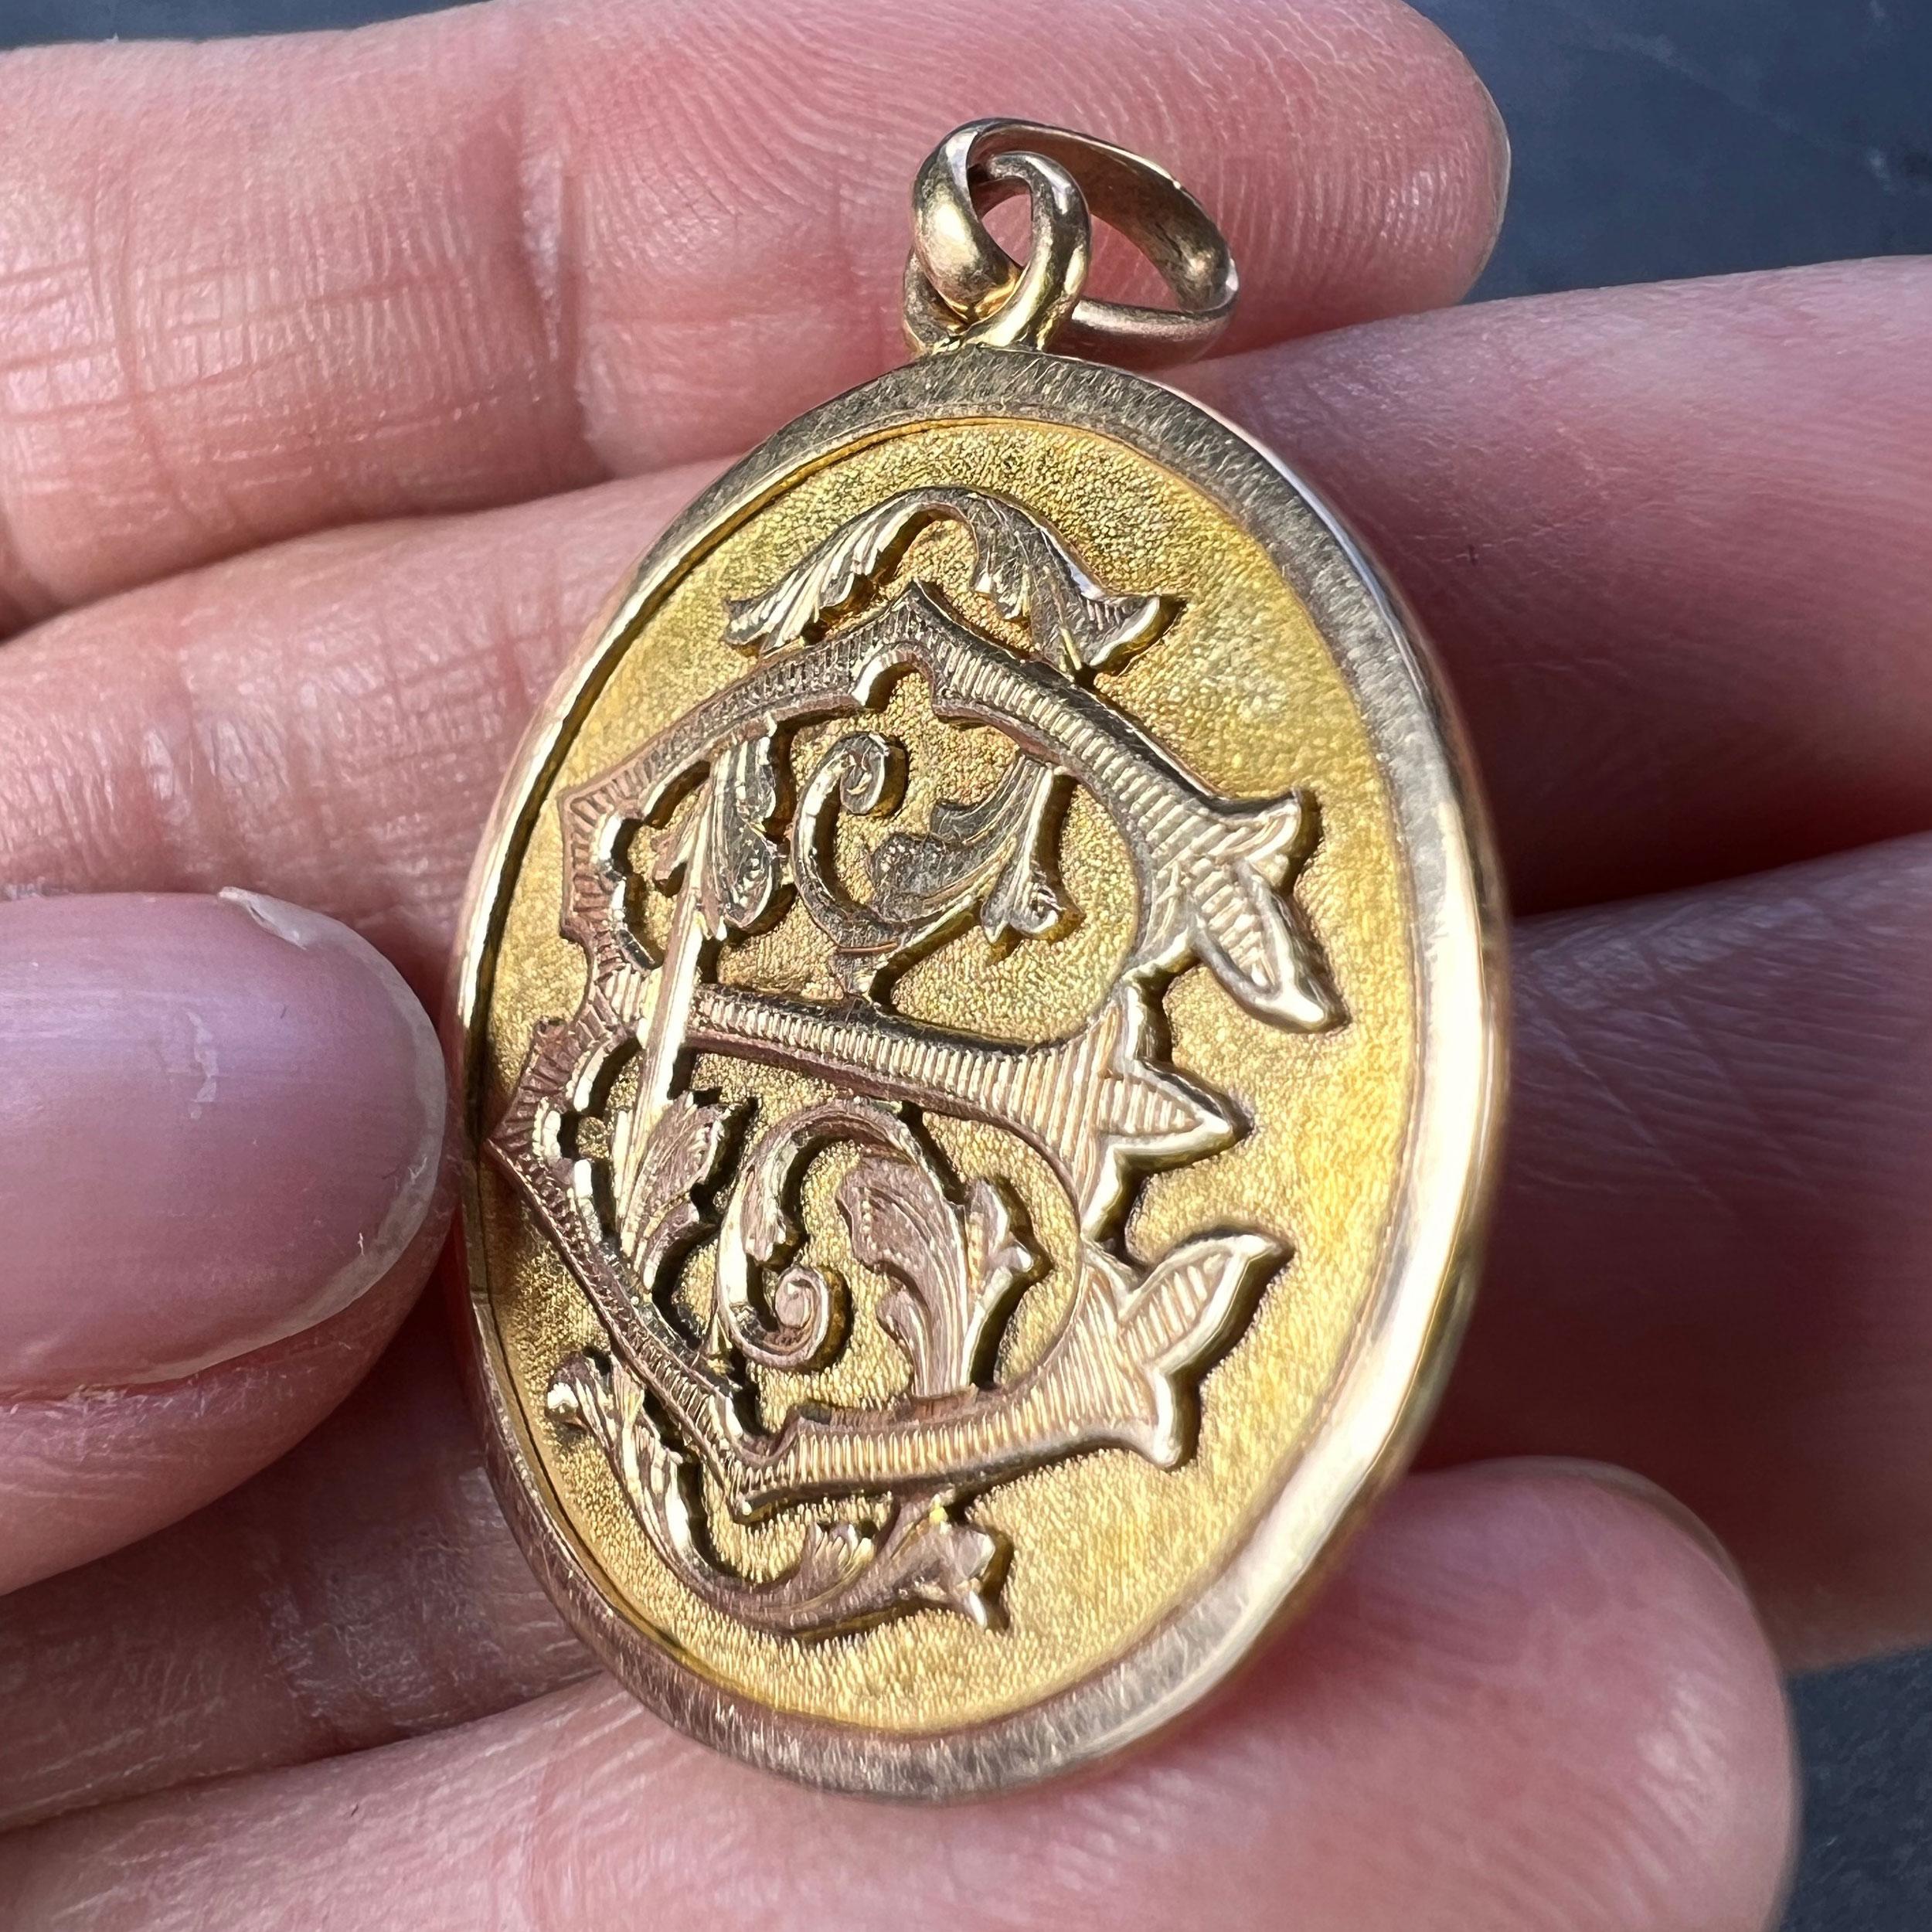 French 18k Rose Gold EC or CE Monogram Medal Pendant For Sale 3